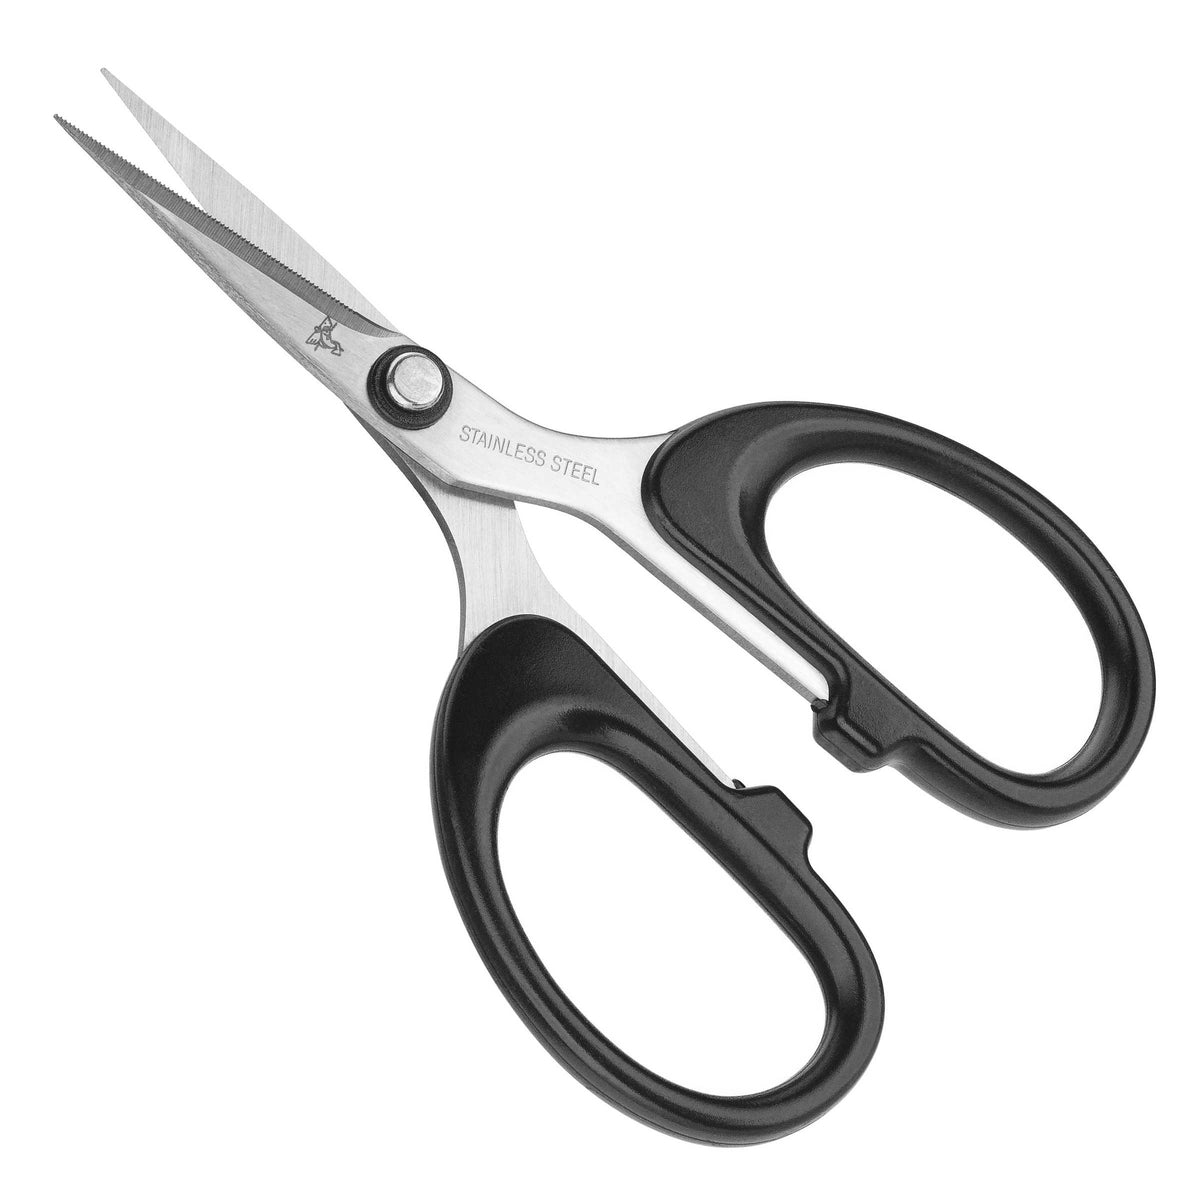 Dr. Slick All Purpose Scissors, Straight 4